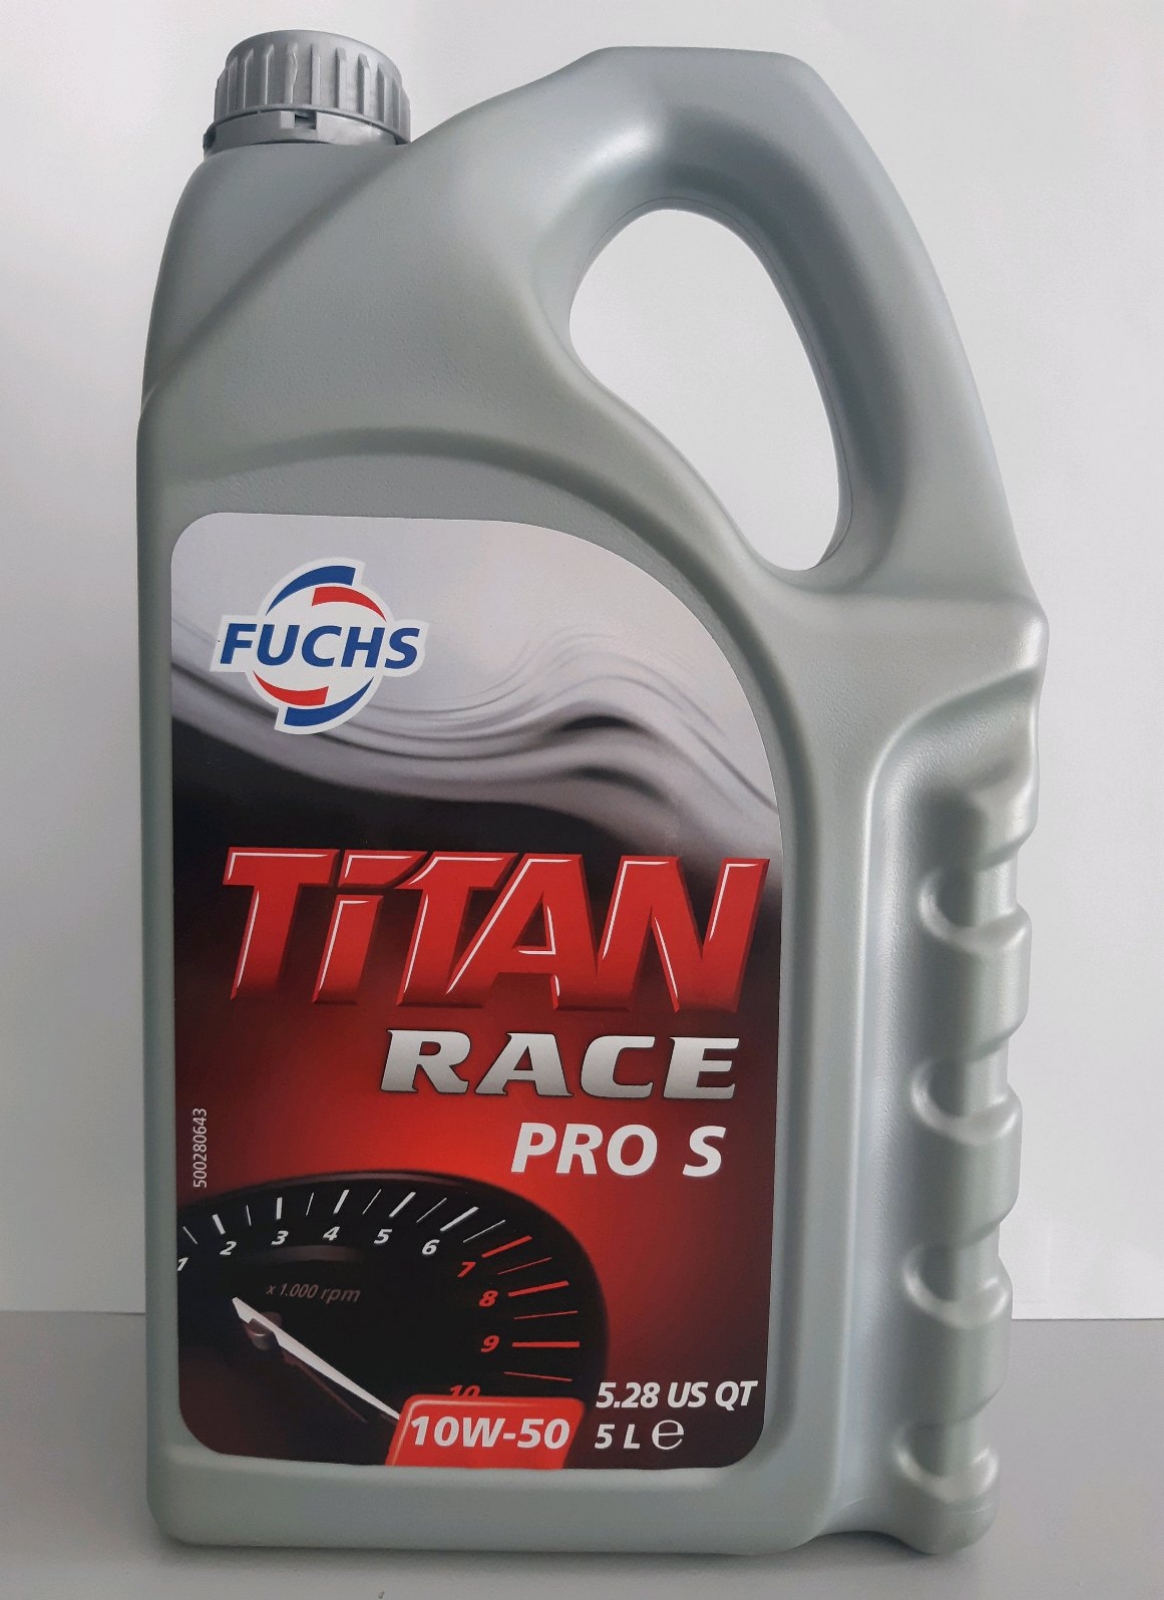 TITAN RACE PRO S 10W50 (5L) Racing Engine Oils FUCHS 